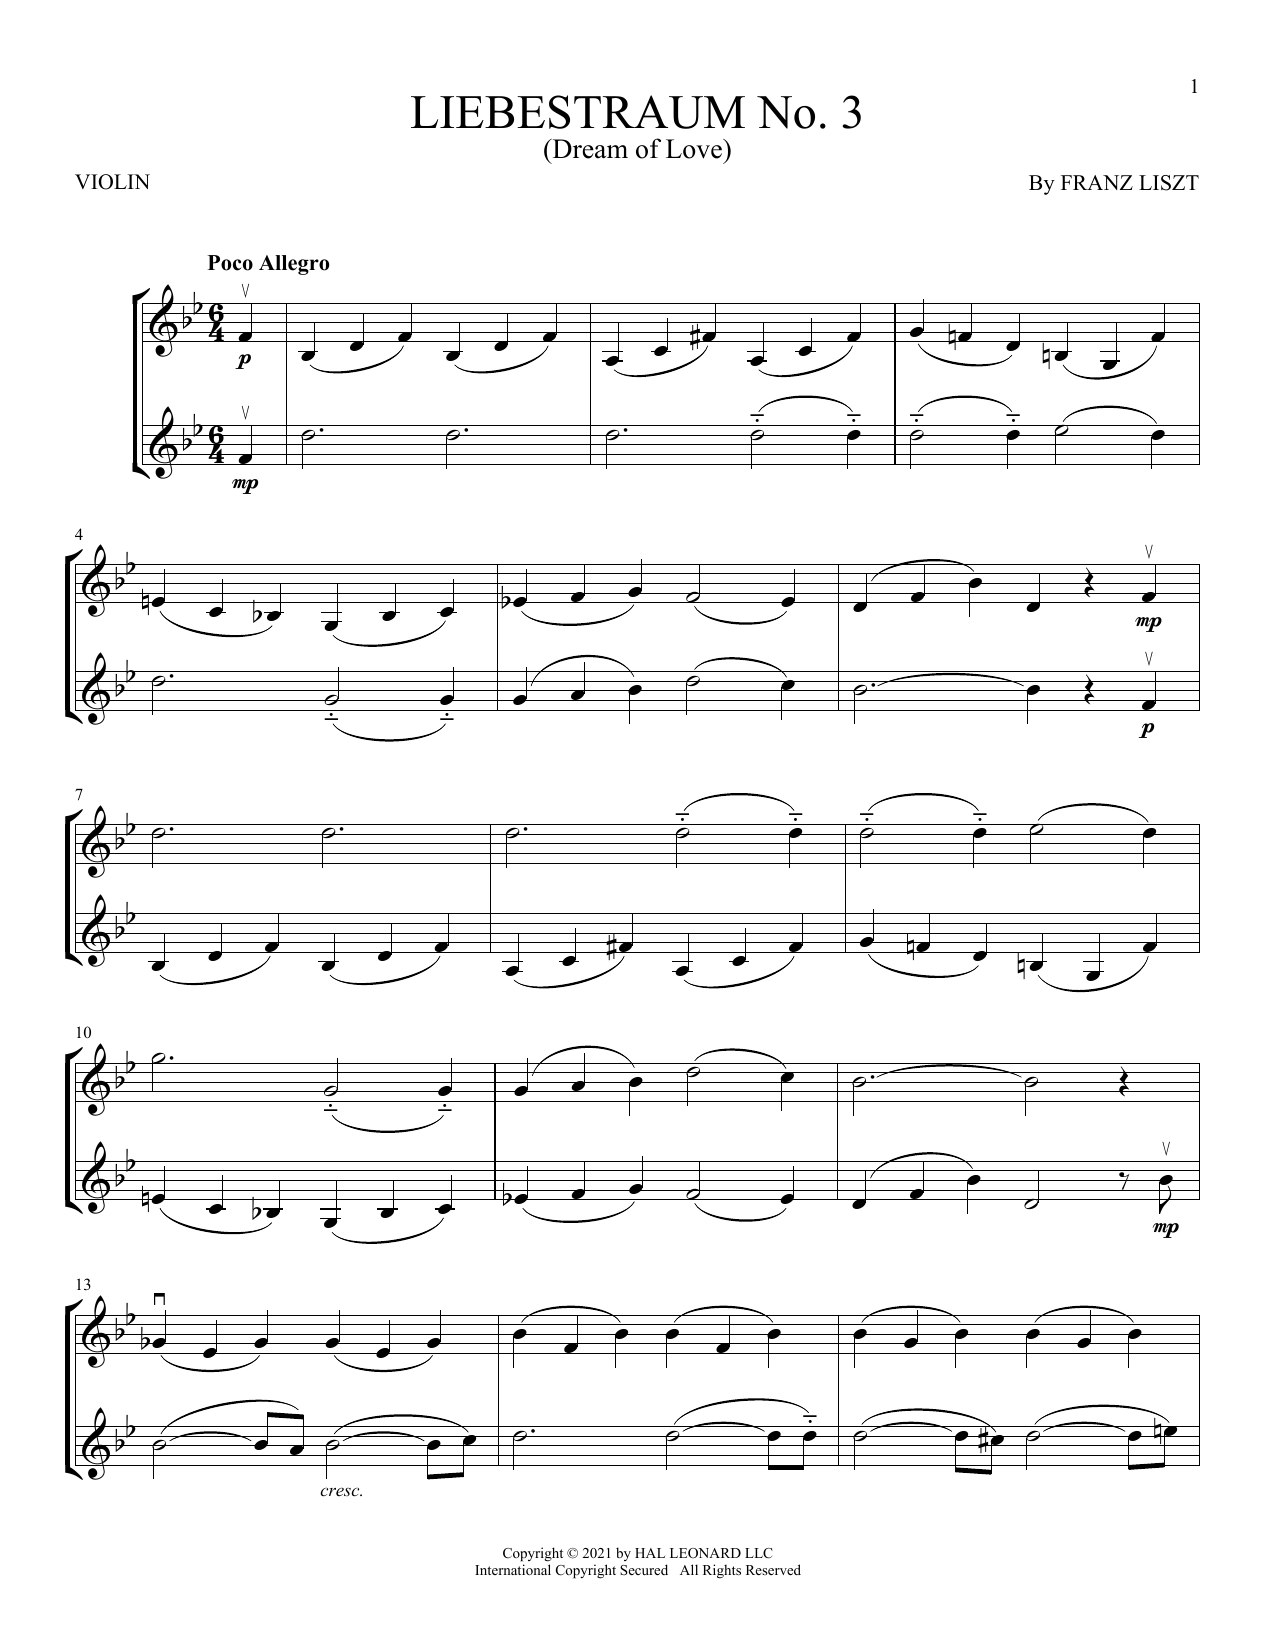 radar Vegetables warrant Franz Liszt "Liebestraum No. 3 (Dream Of Love)" Sheet Music | Download PDF  Score 430491